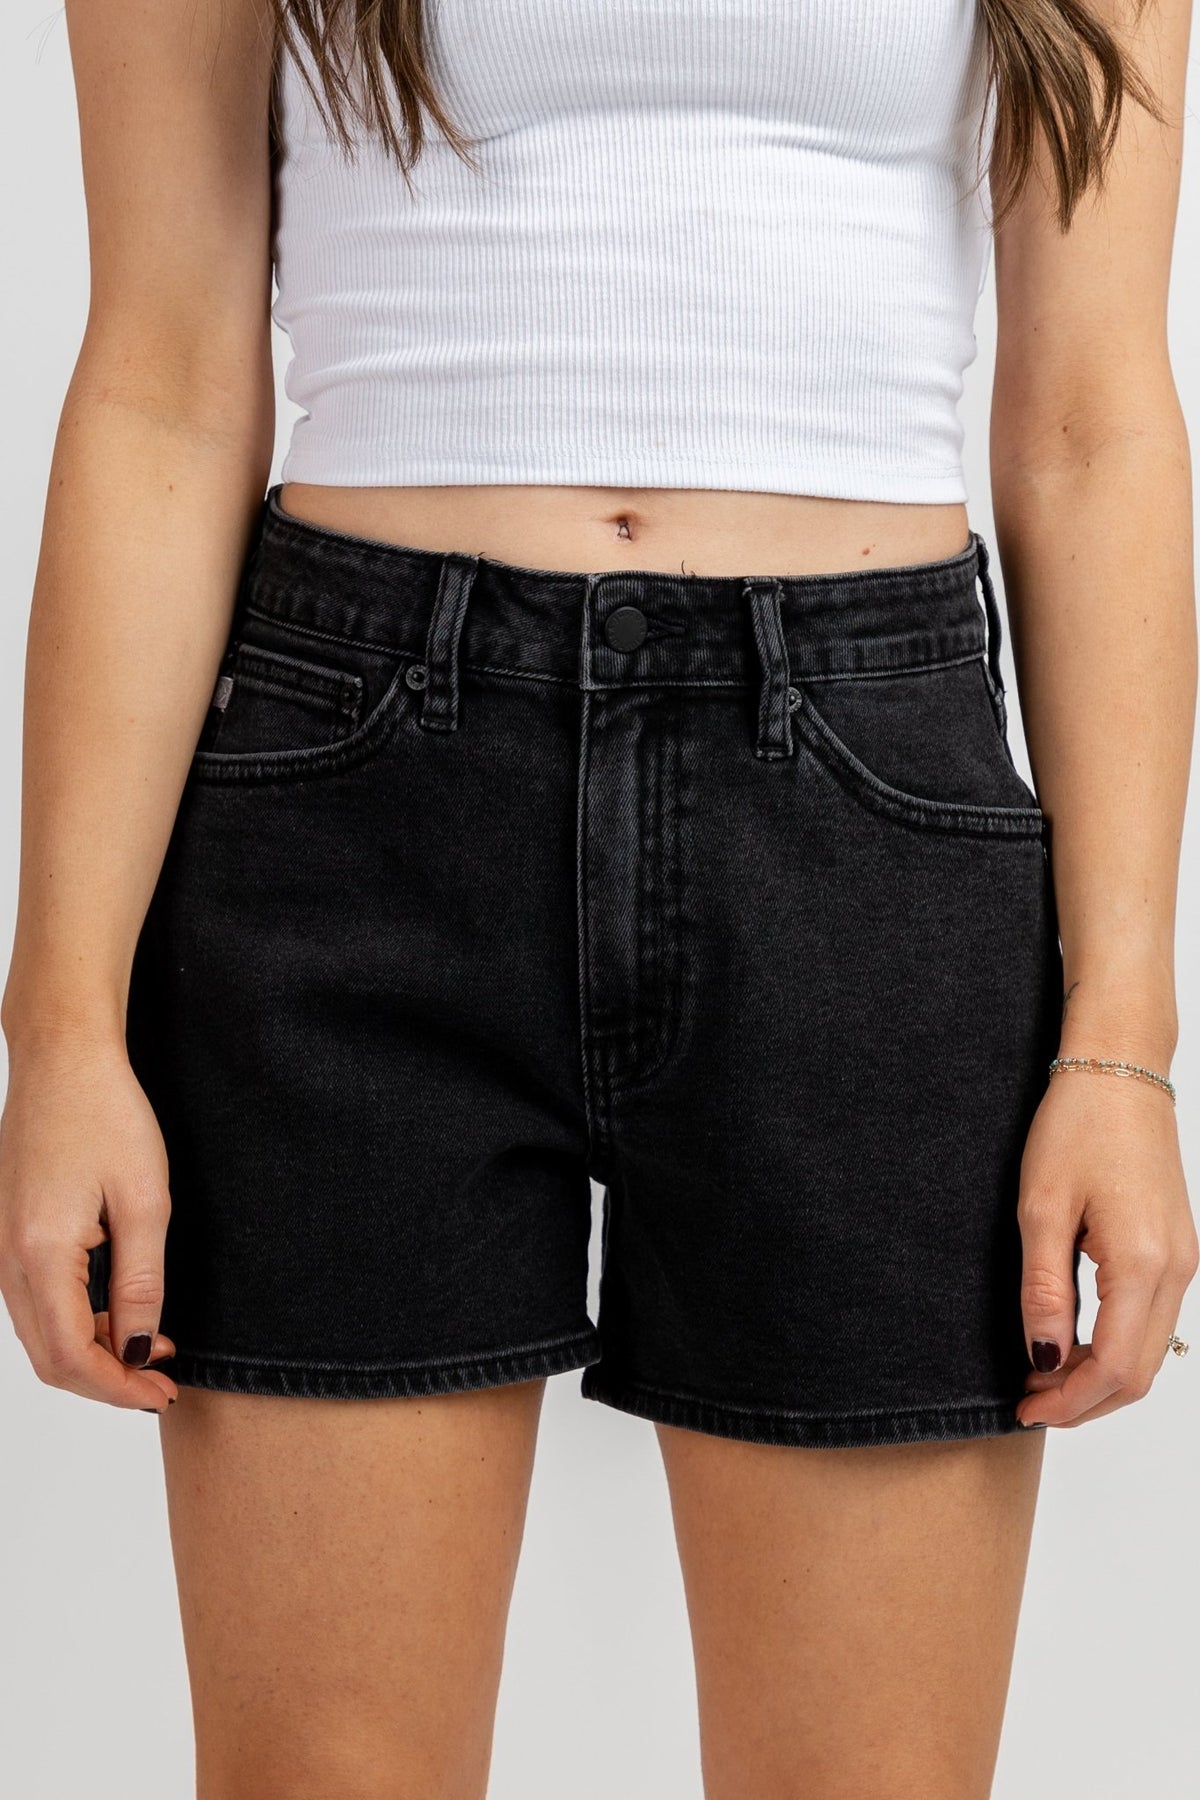 JBD High rise mom denim shorts washed black - Cute shorts - Trendy Shorts at Lush Fashion Lounge Boutique in Oklahoma City